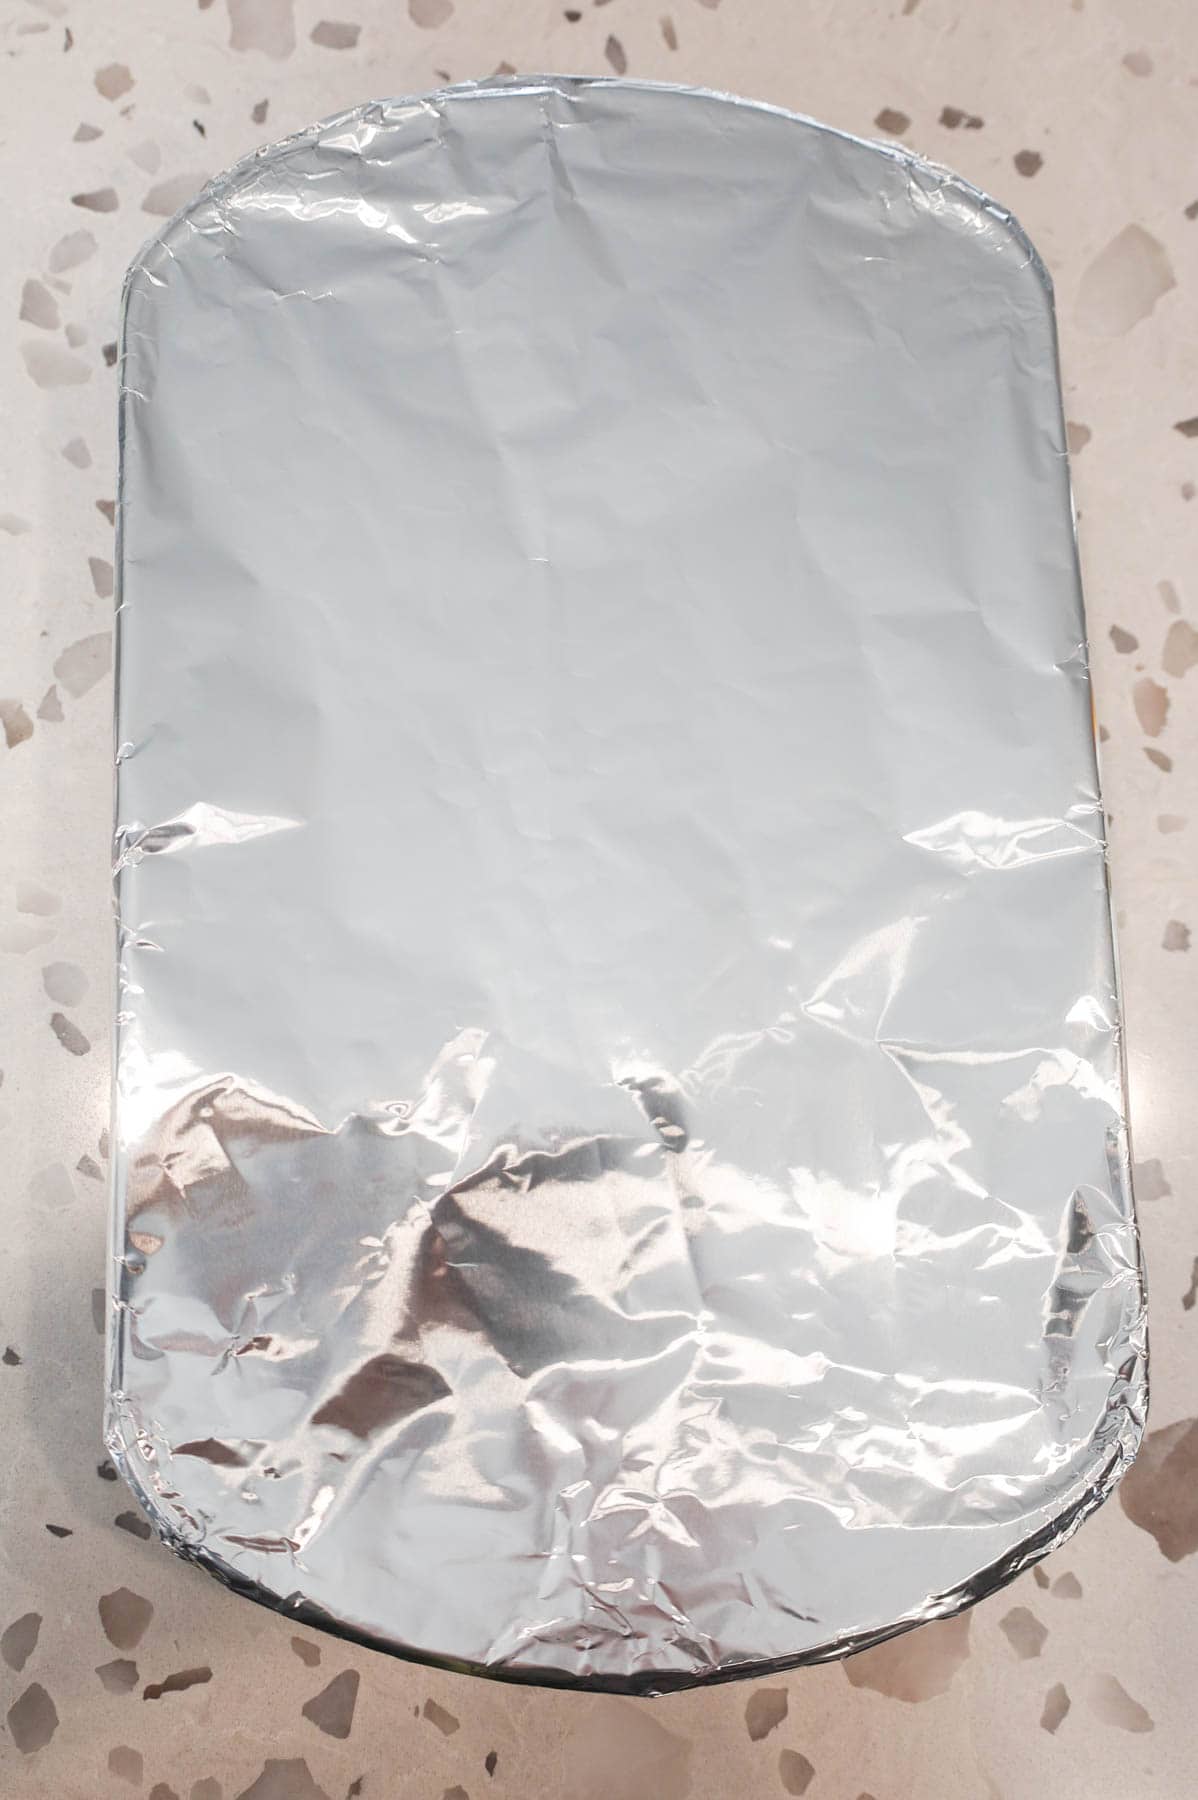 aluminum foil covered baking dish